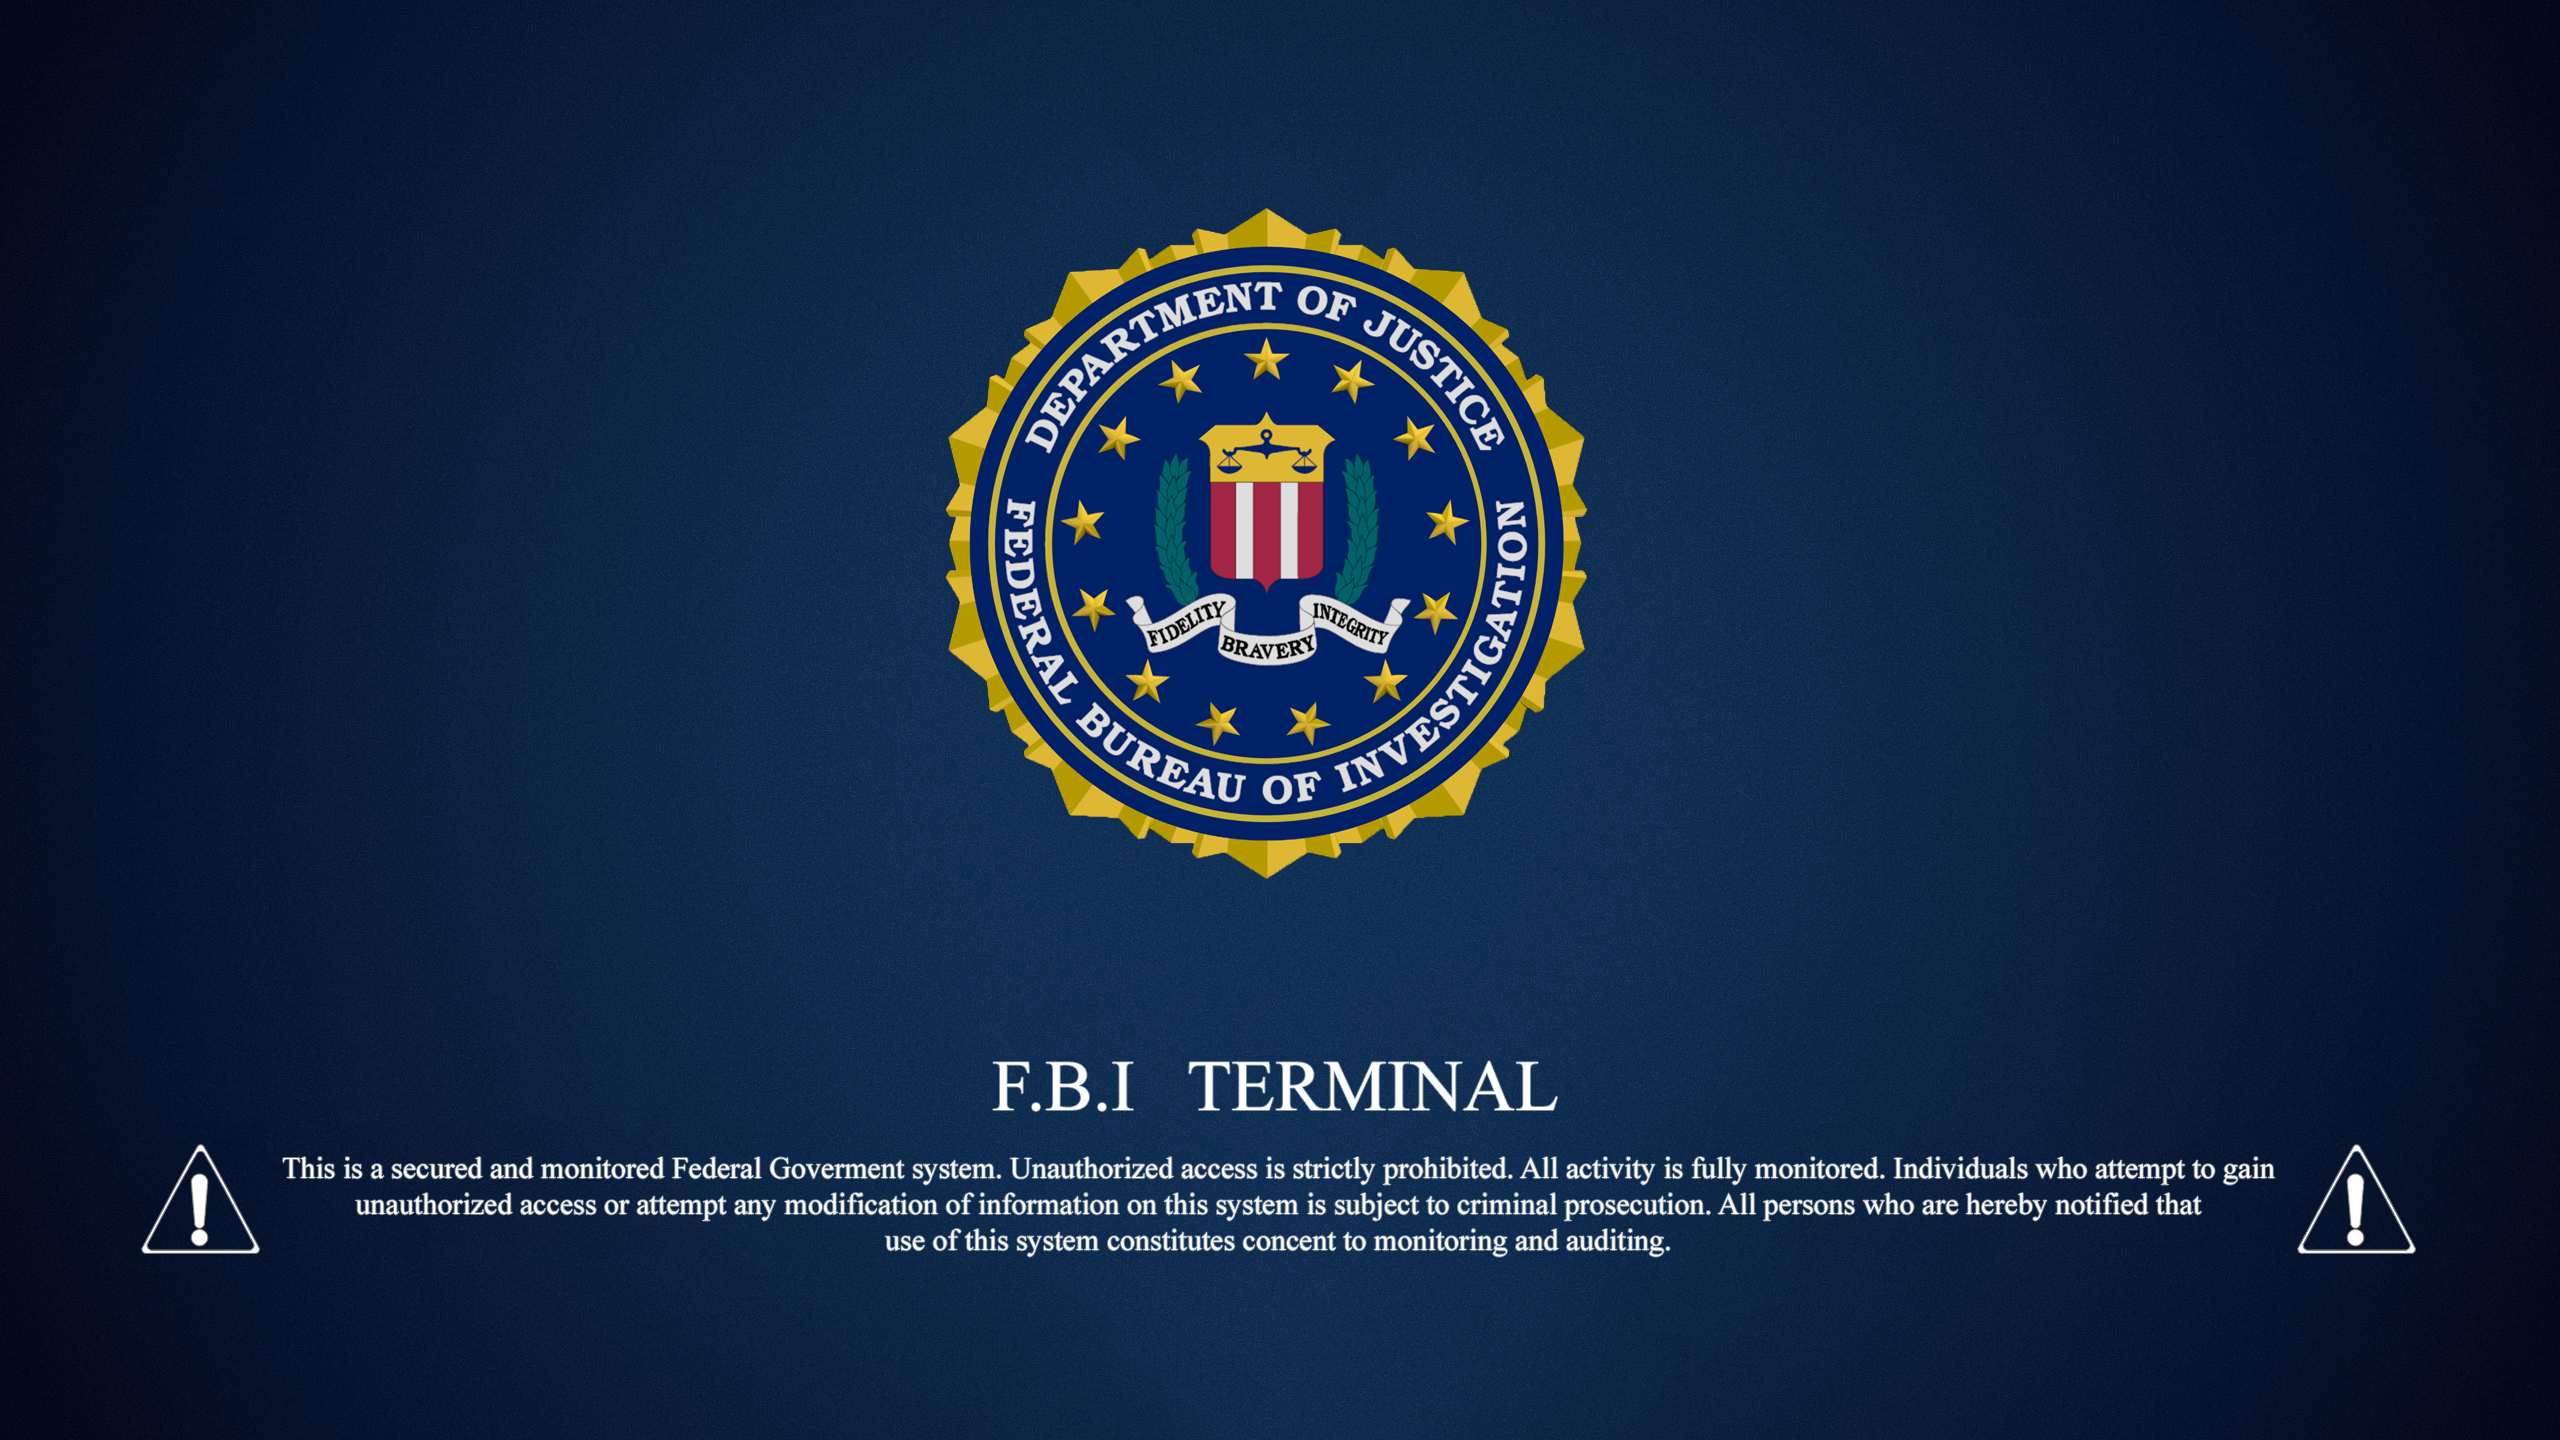 Fbi Terminal Full HD Wallpaper And Background